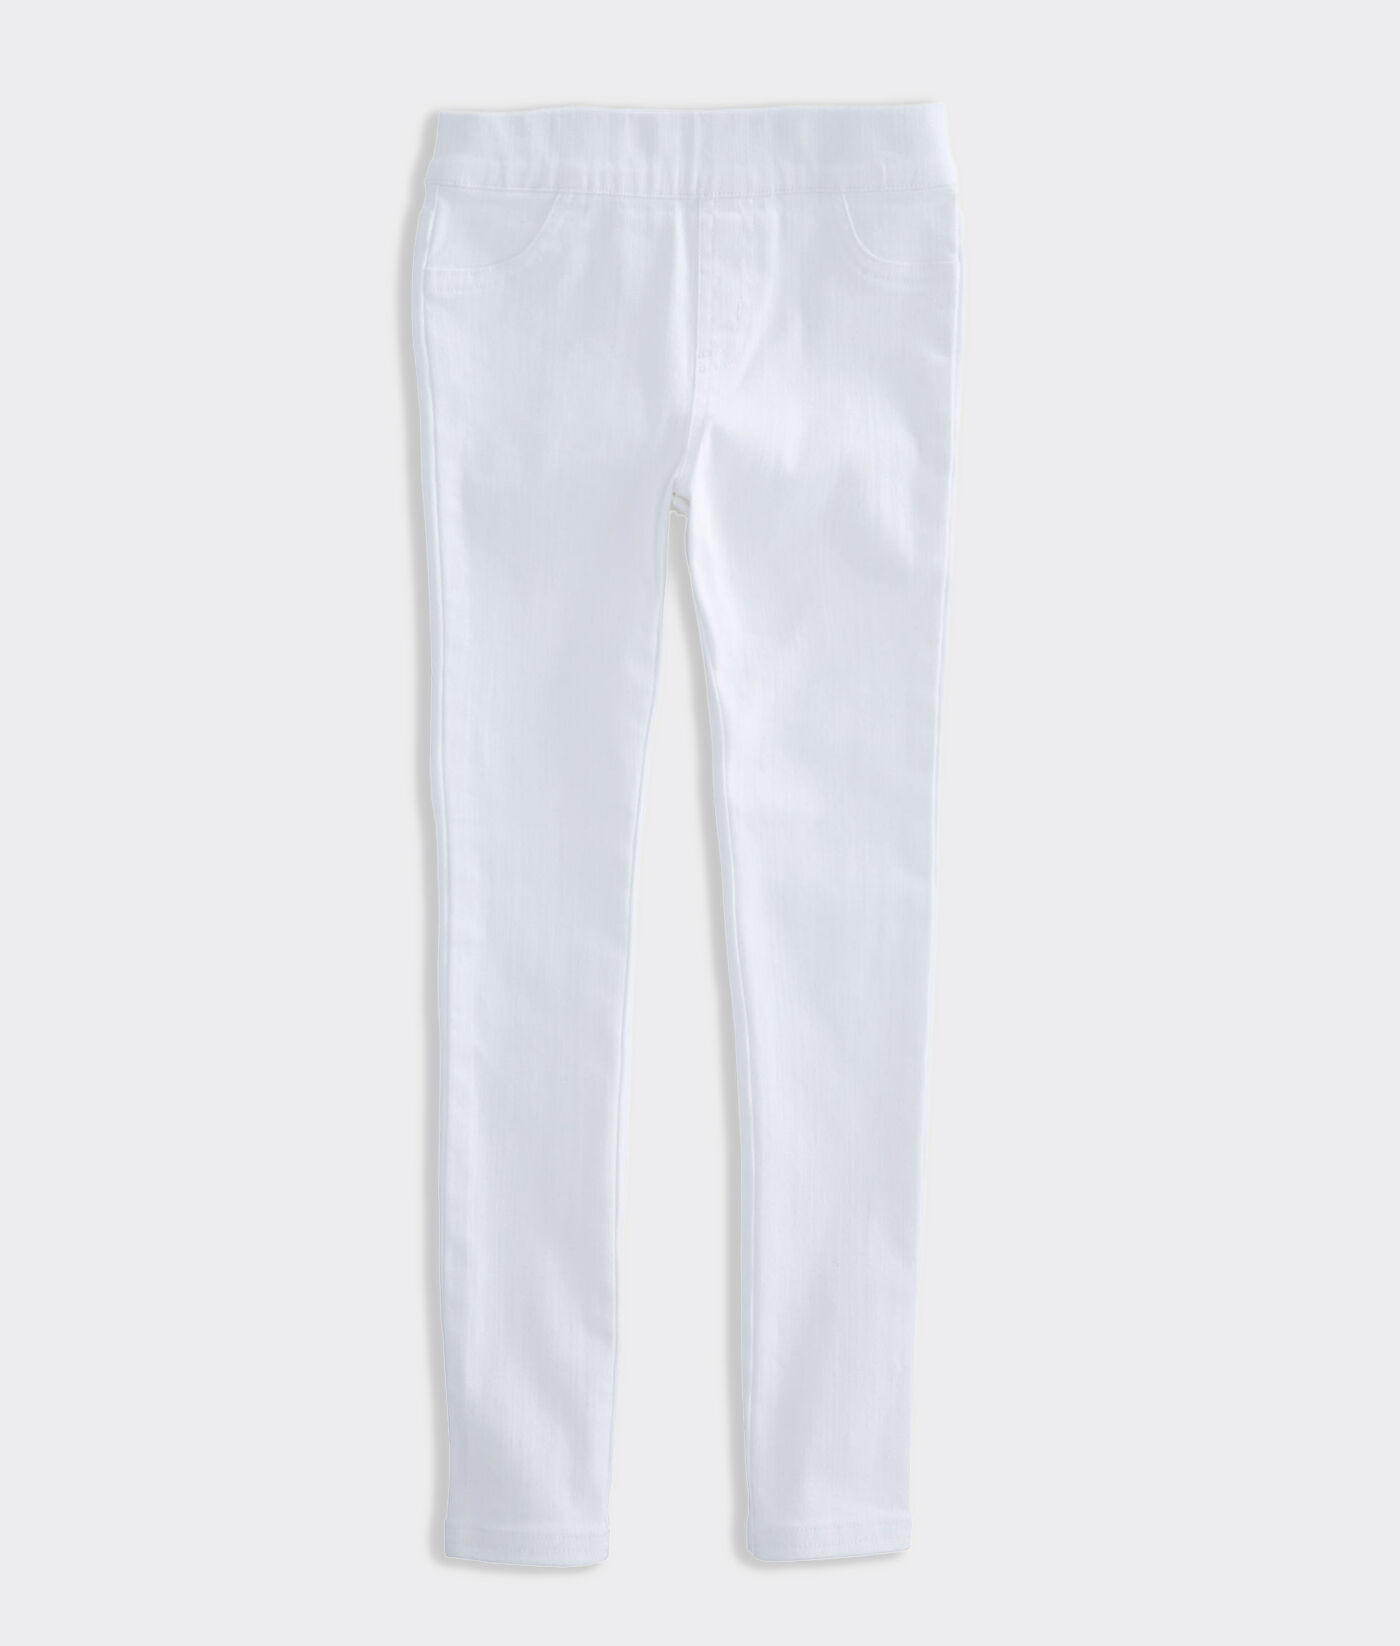 jeans pant white